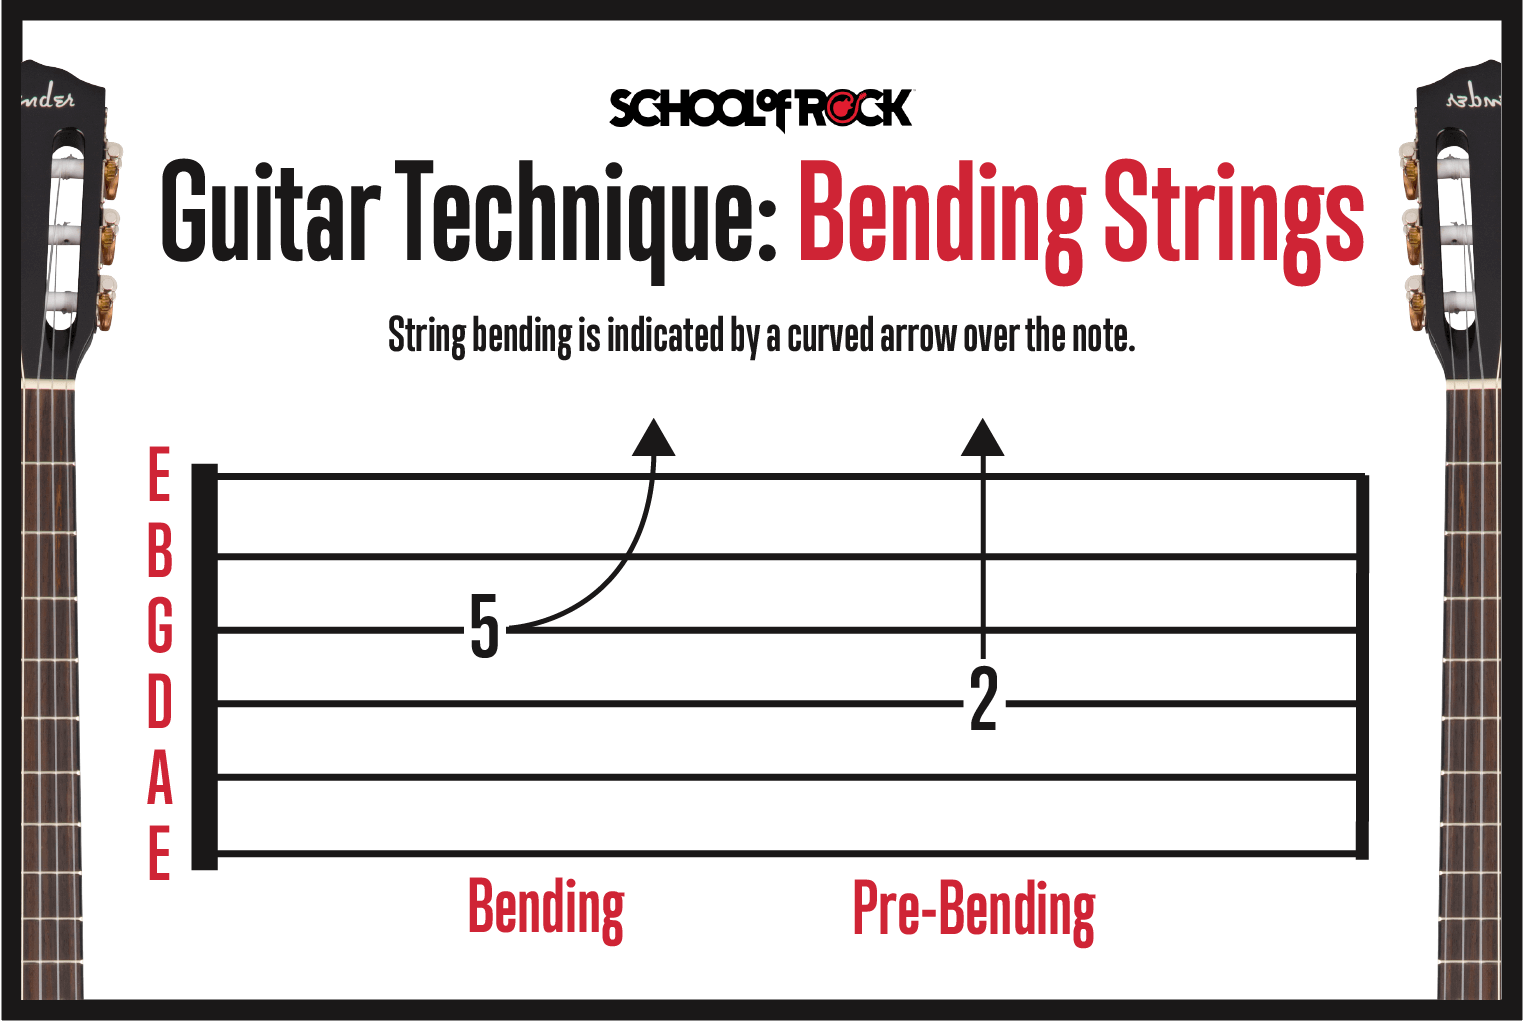 Guitar technique bending strings